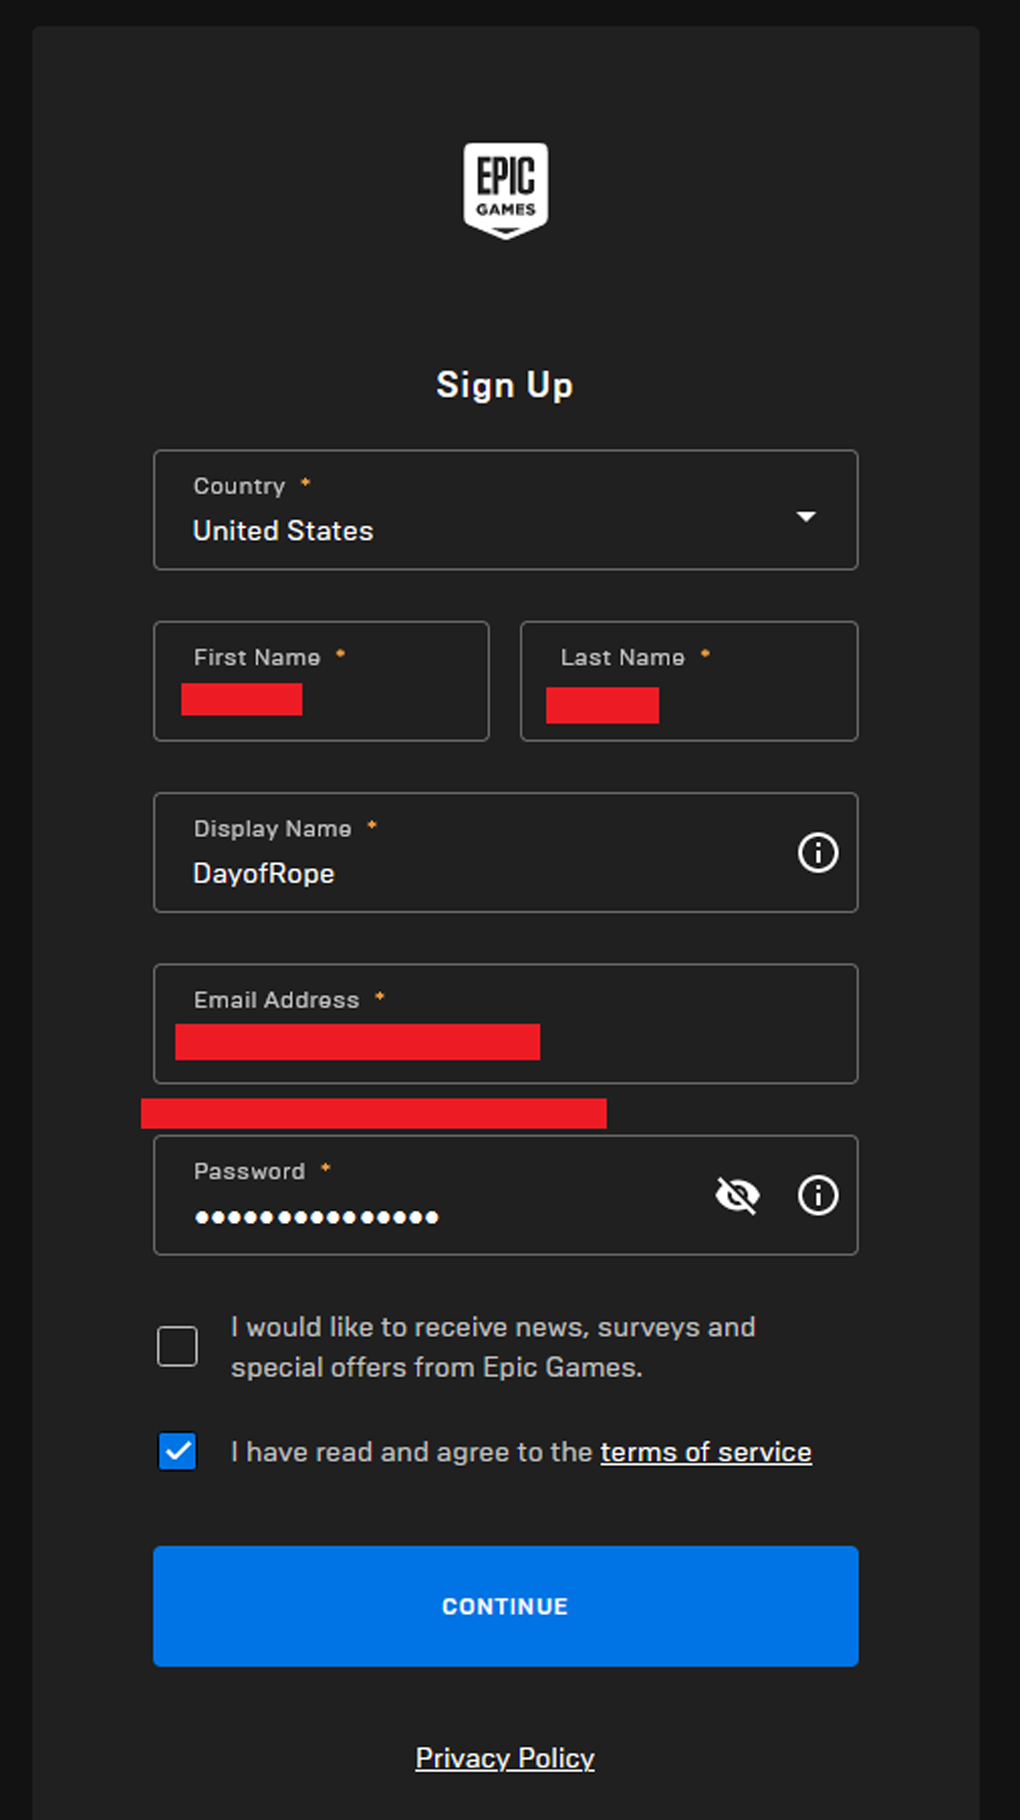 Screenshot showing username "DayofRope"